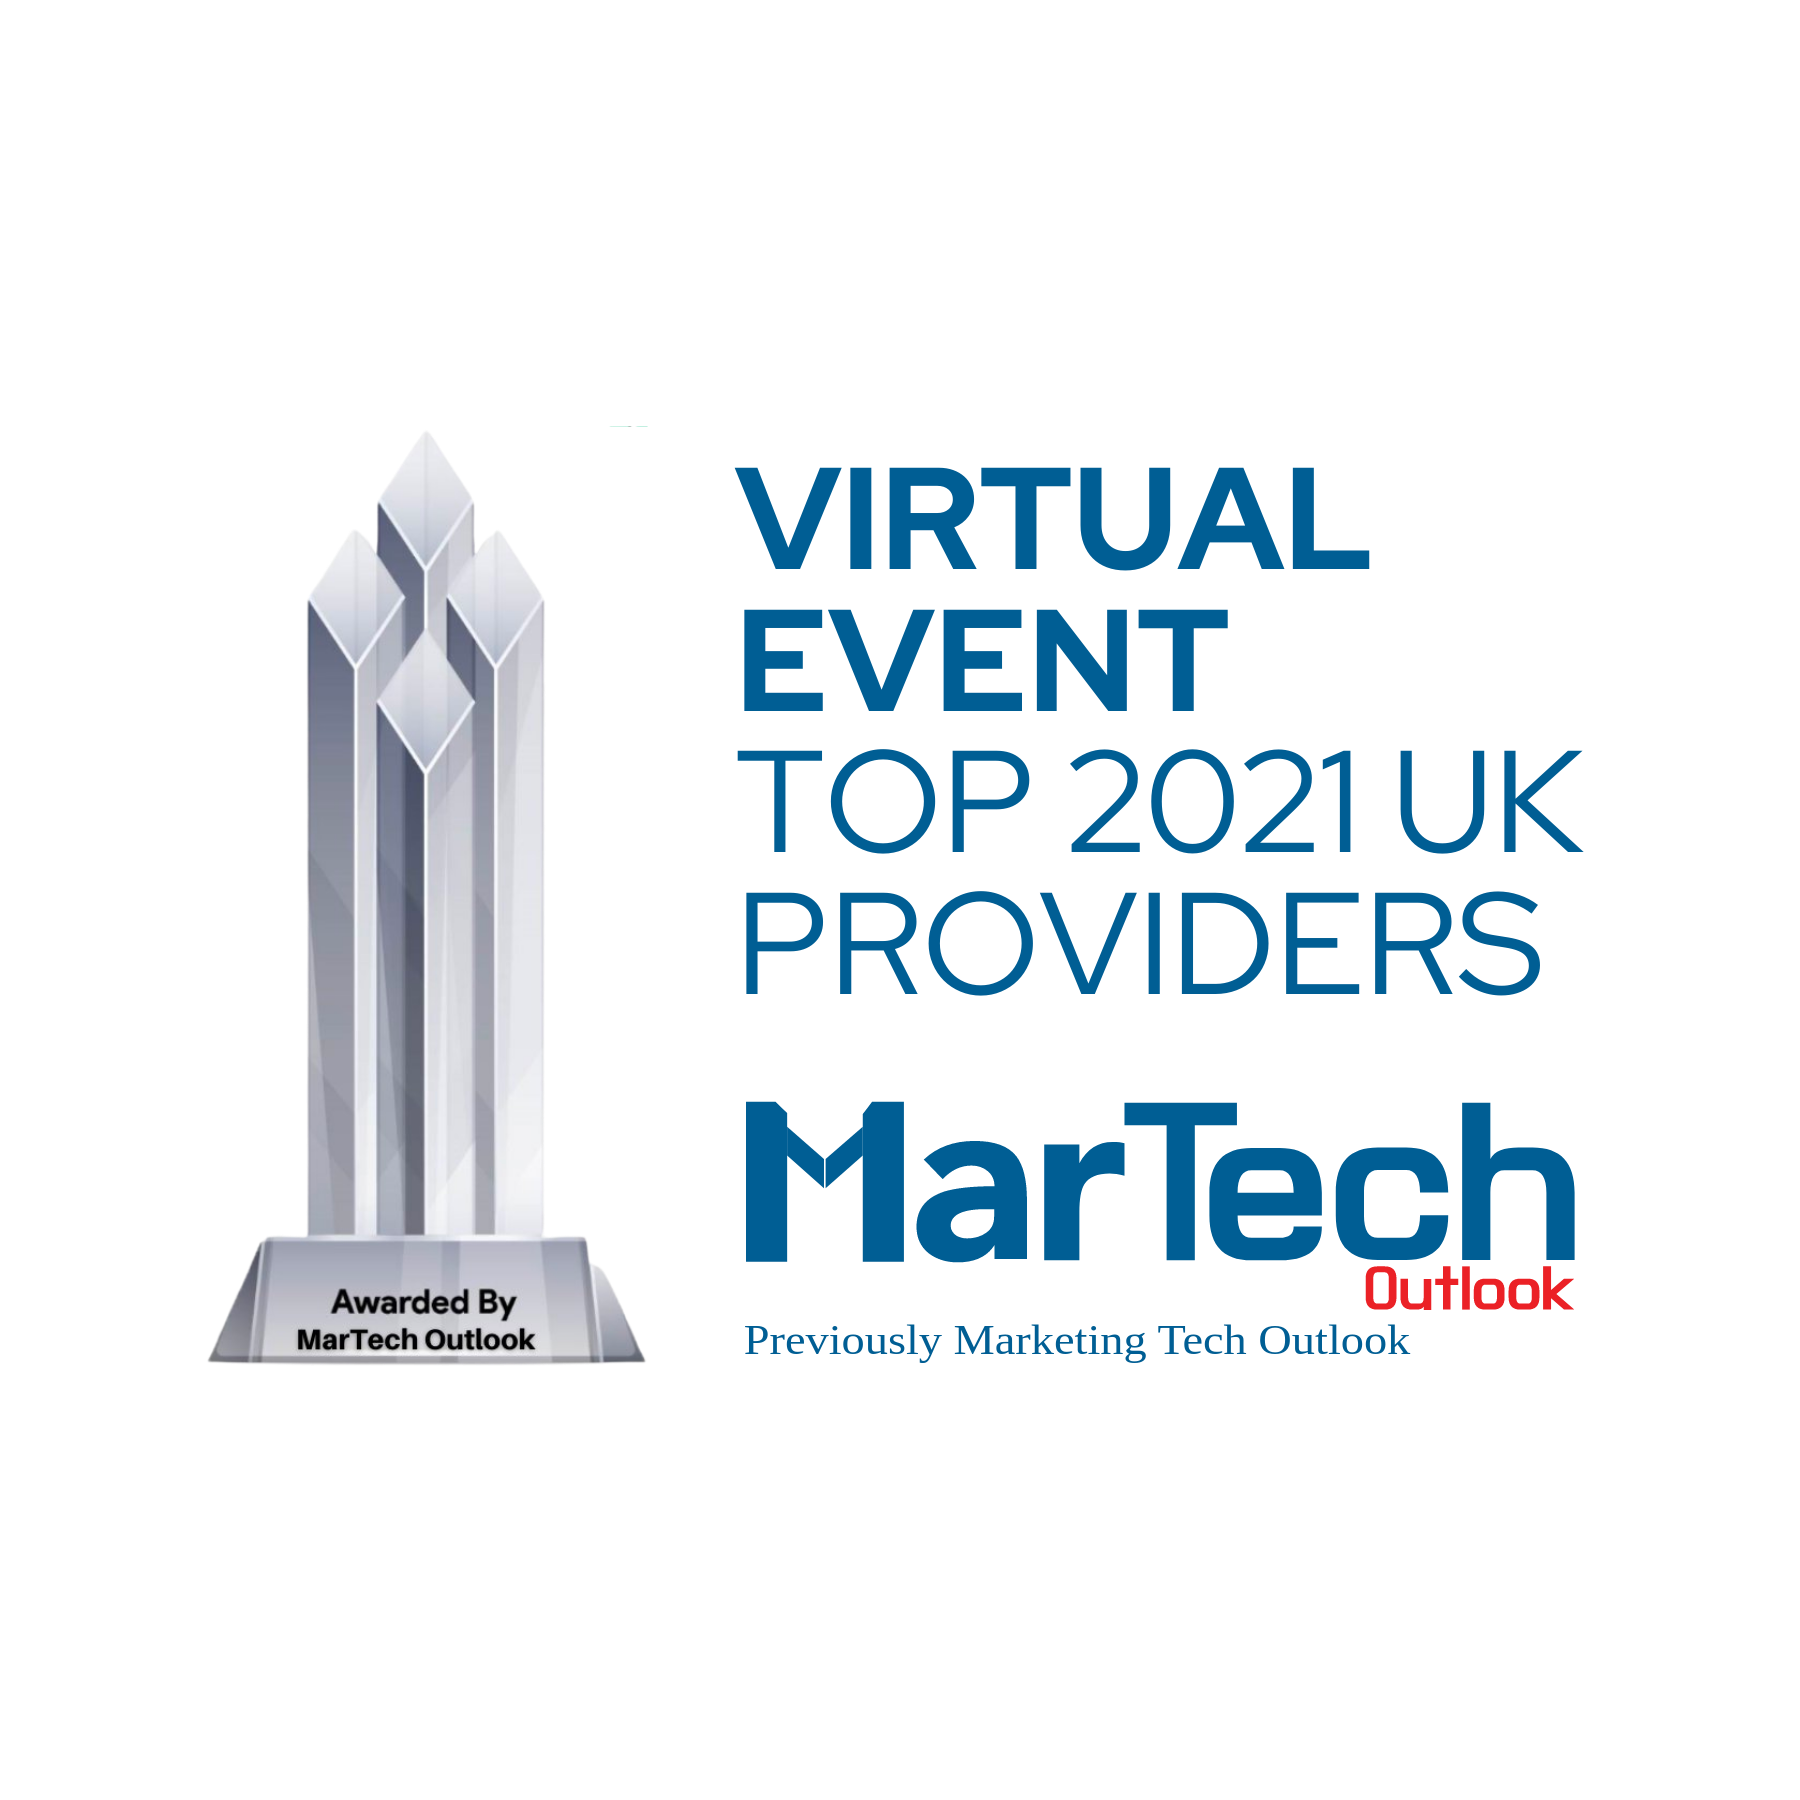 Virtual event top 2021